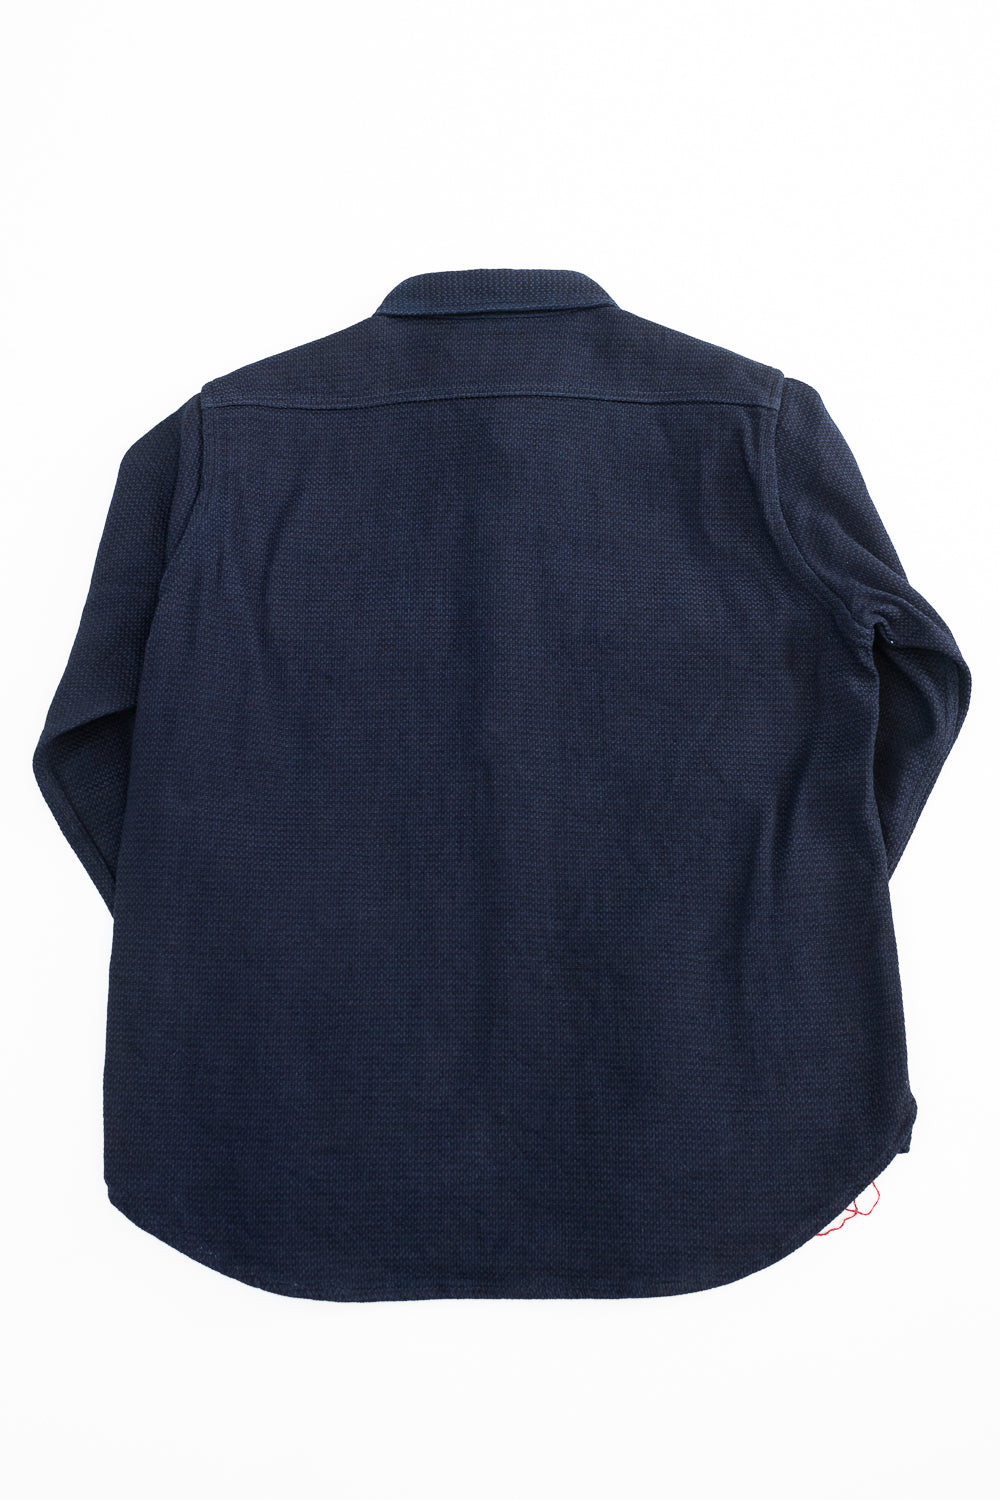 IHSH-389-IND - 12oz Dobby Cloth CPO Shirt - Indigo